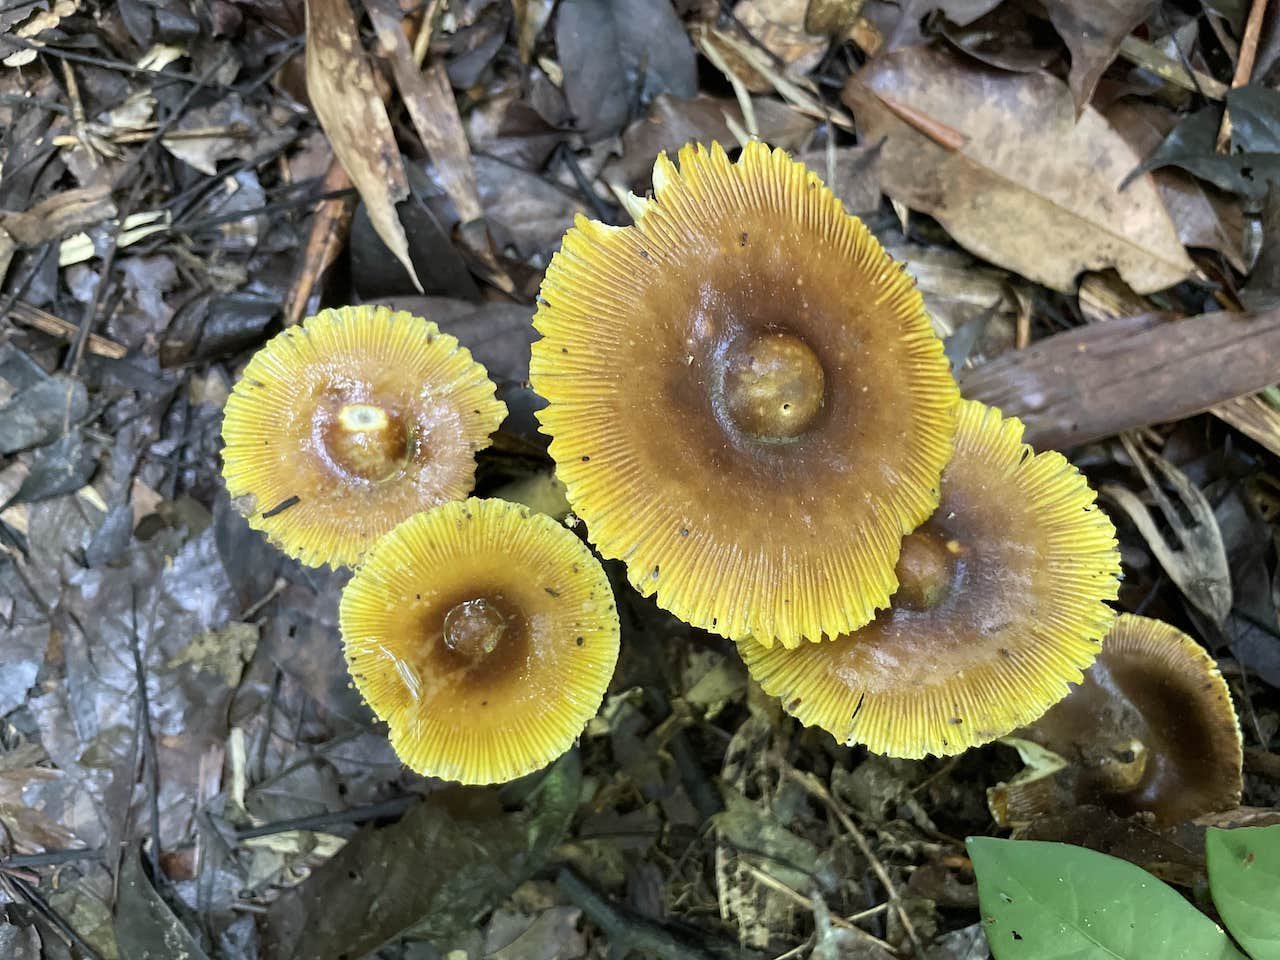 Fungi found in Botanic Garden